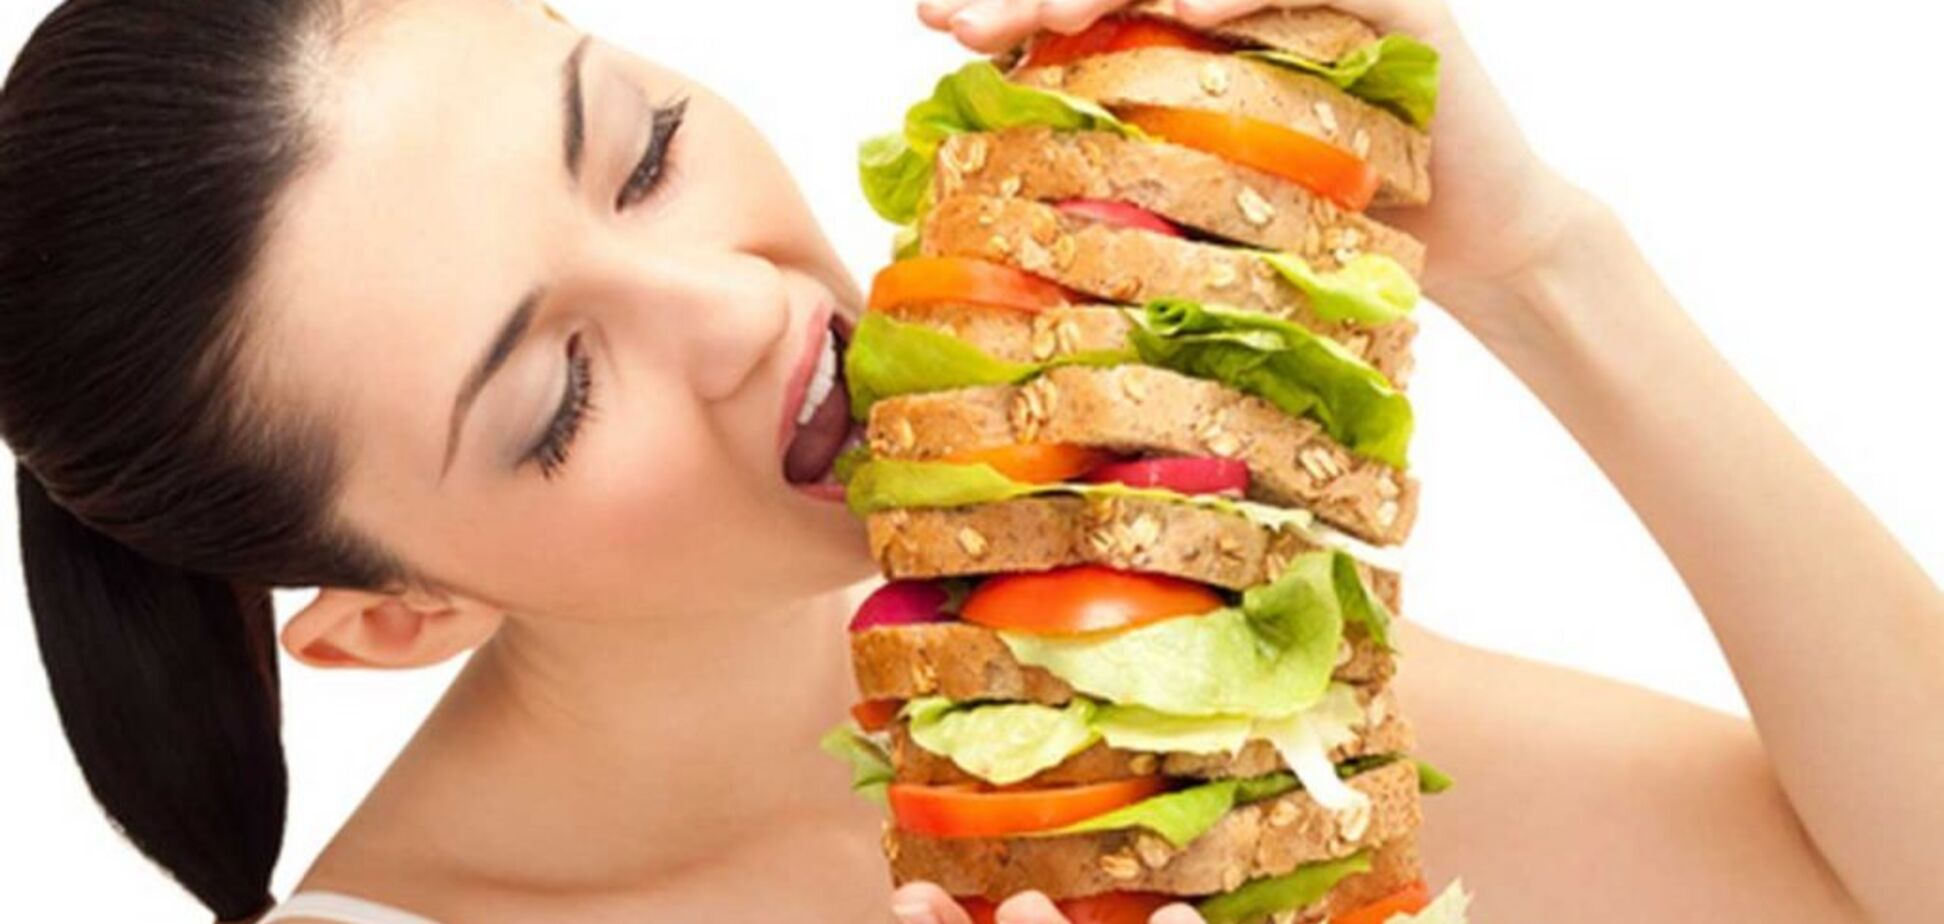 Бутерброд – яд: Супрун пояснила опасность популярного перекуса